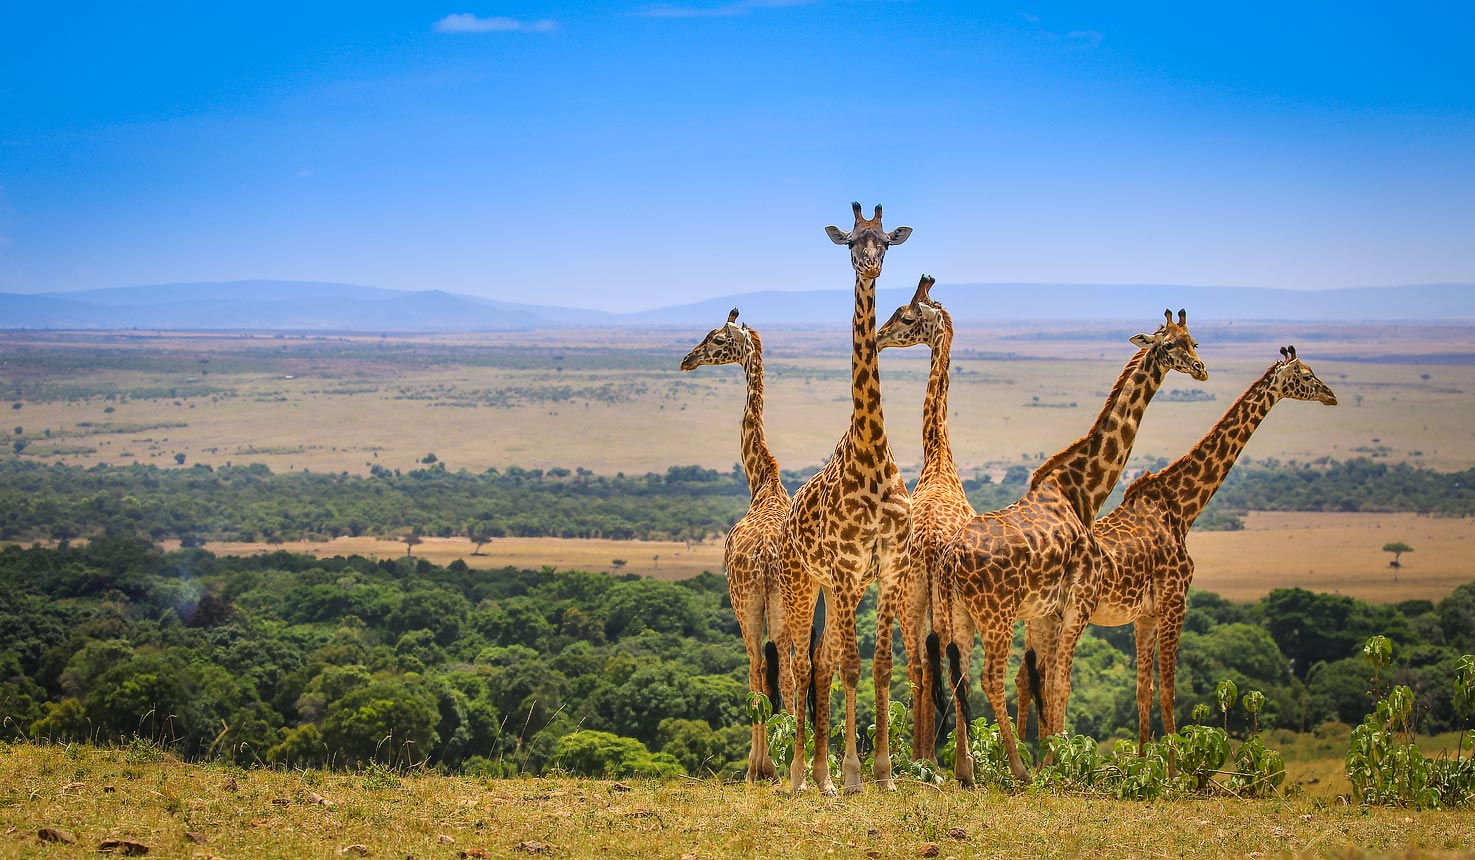 Traveling solo to Kenya on a wildlife safari